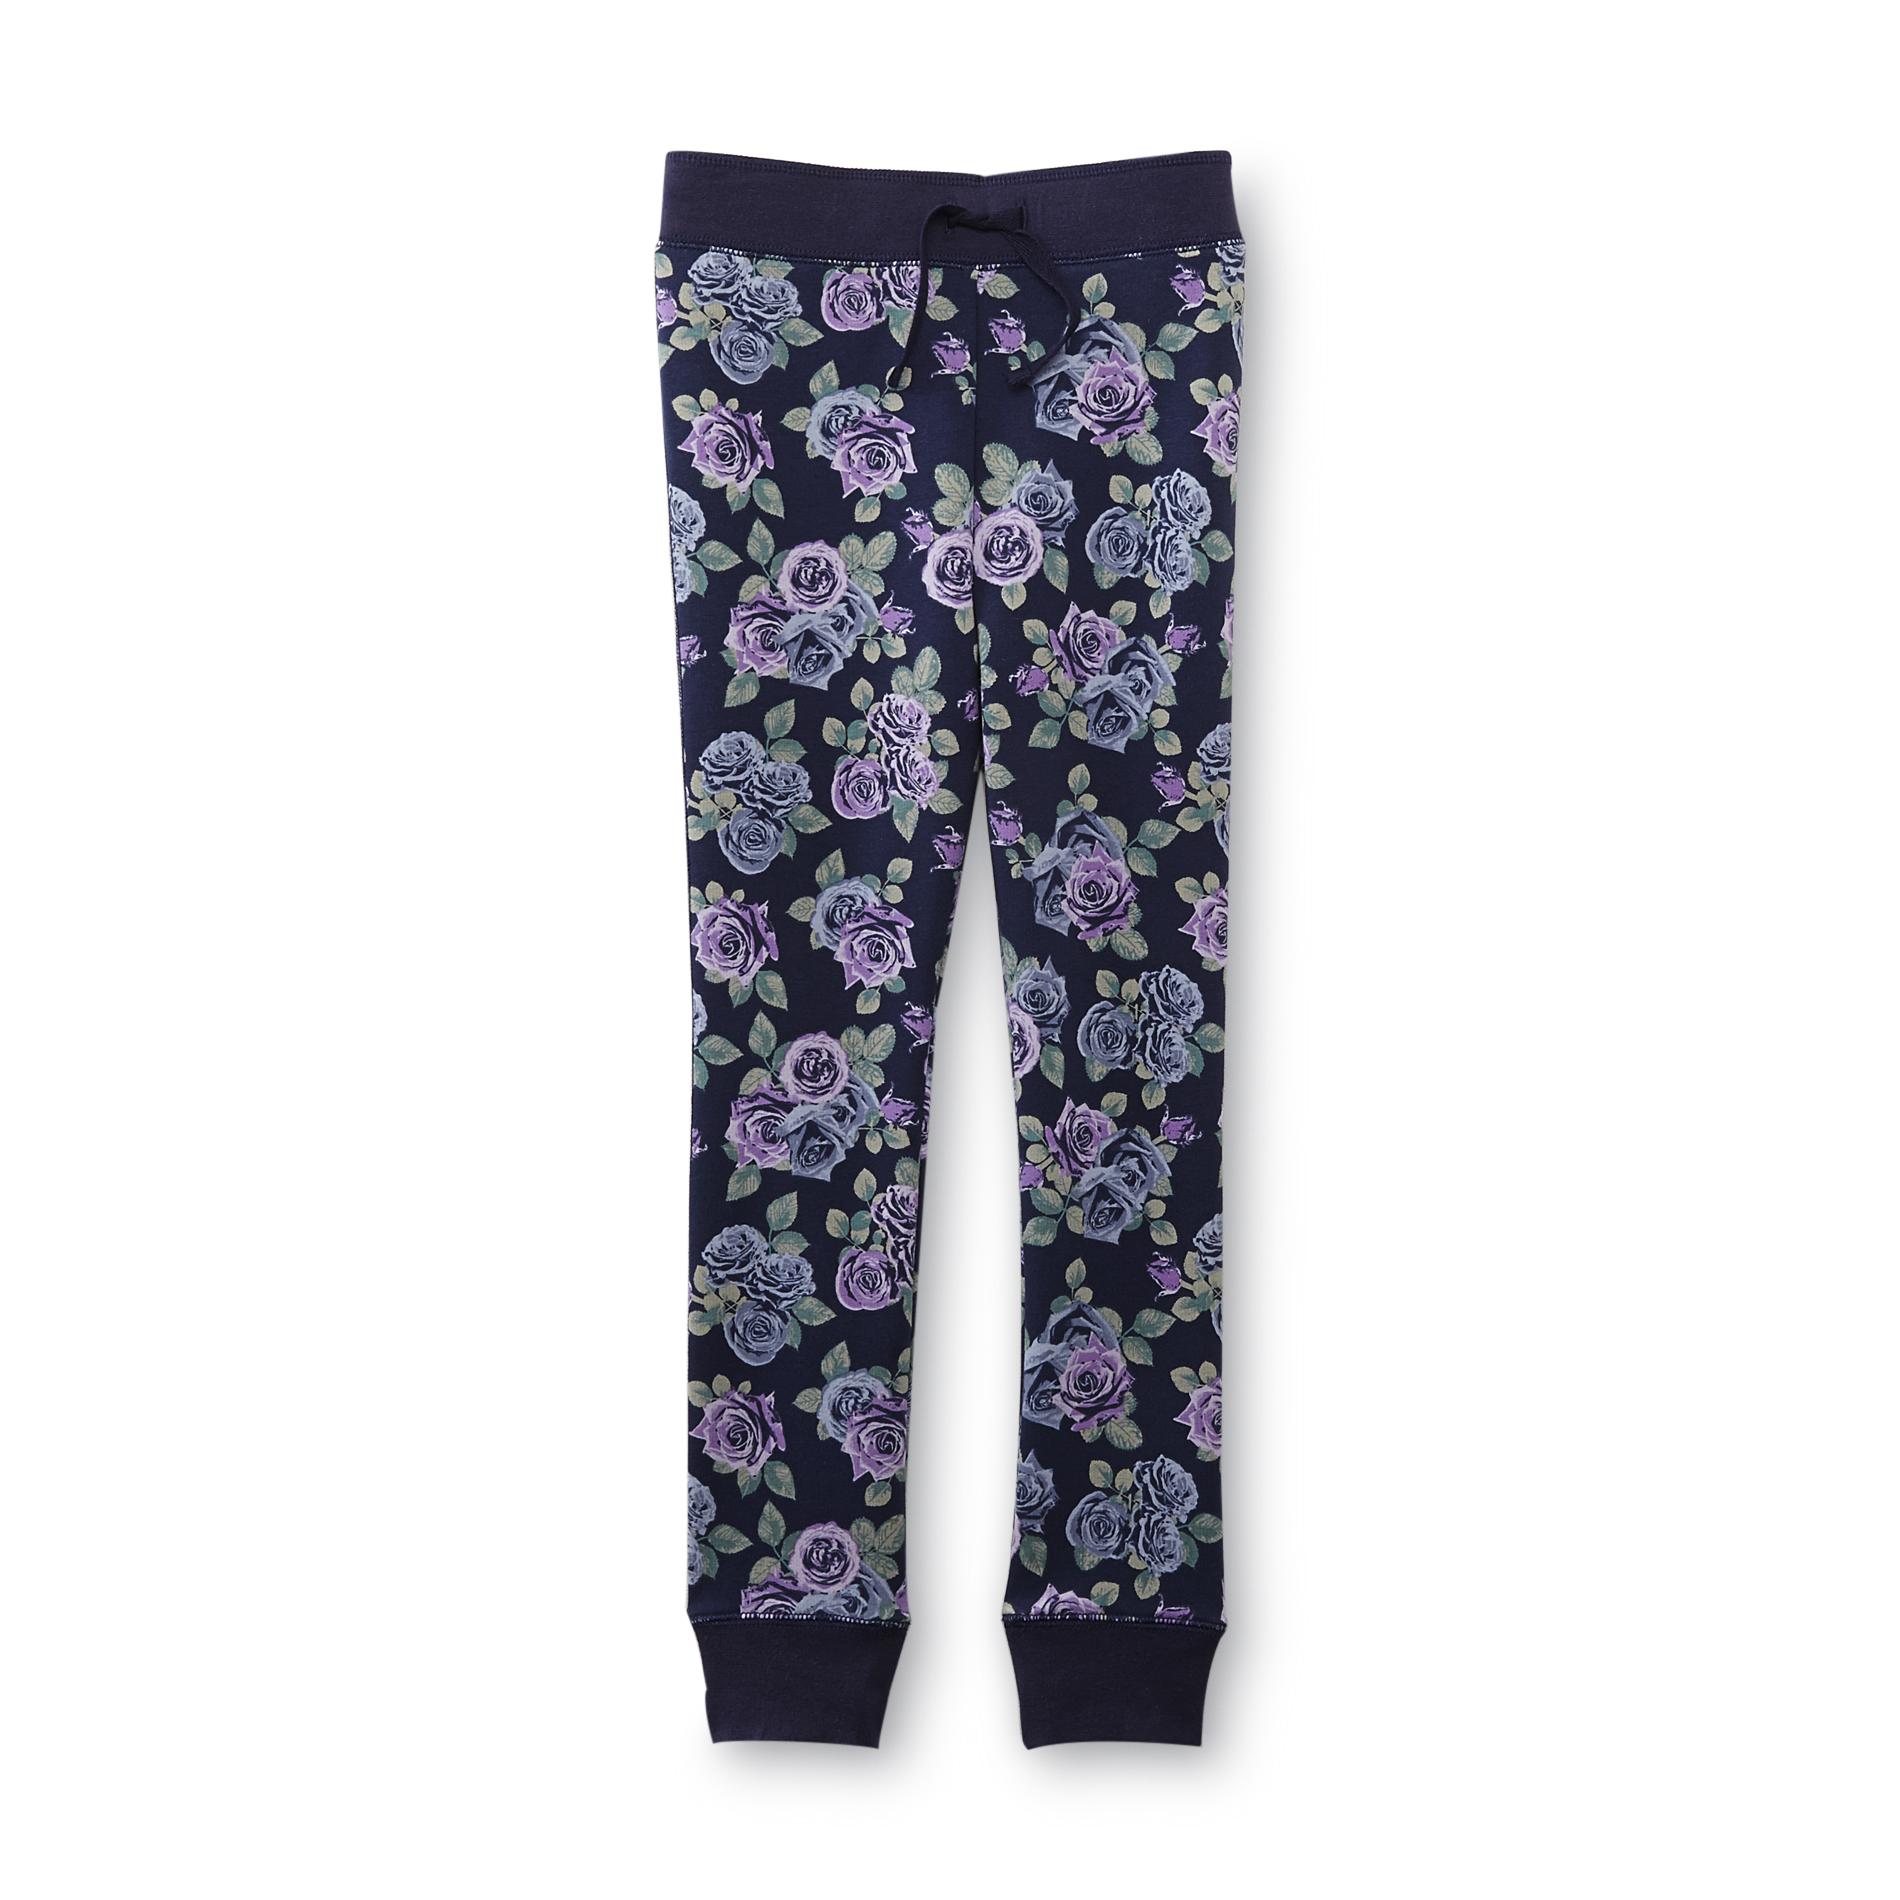 Toughskins Girl's Sweatpants - Floral